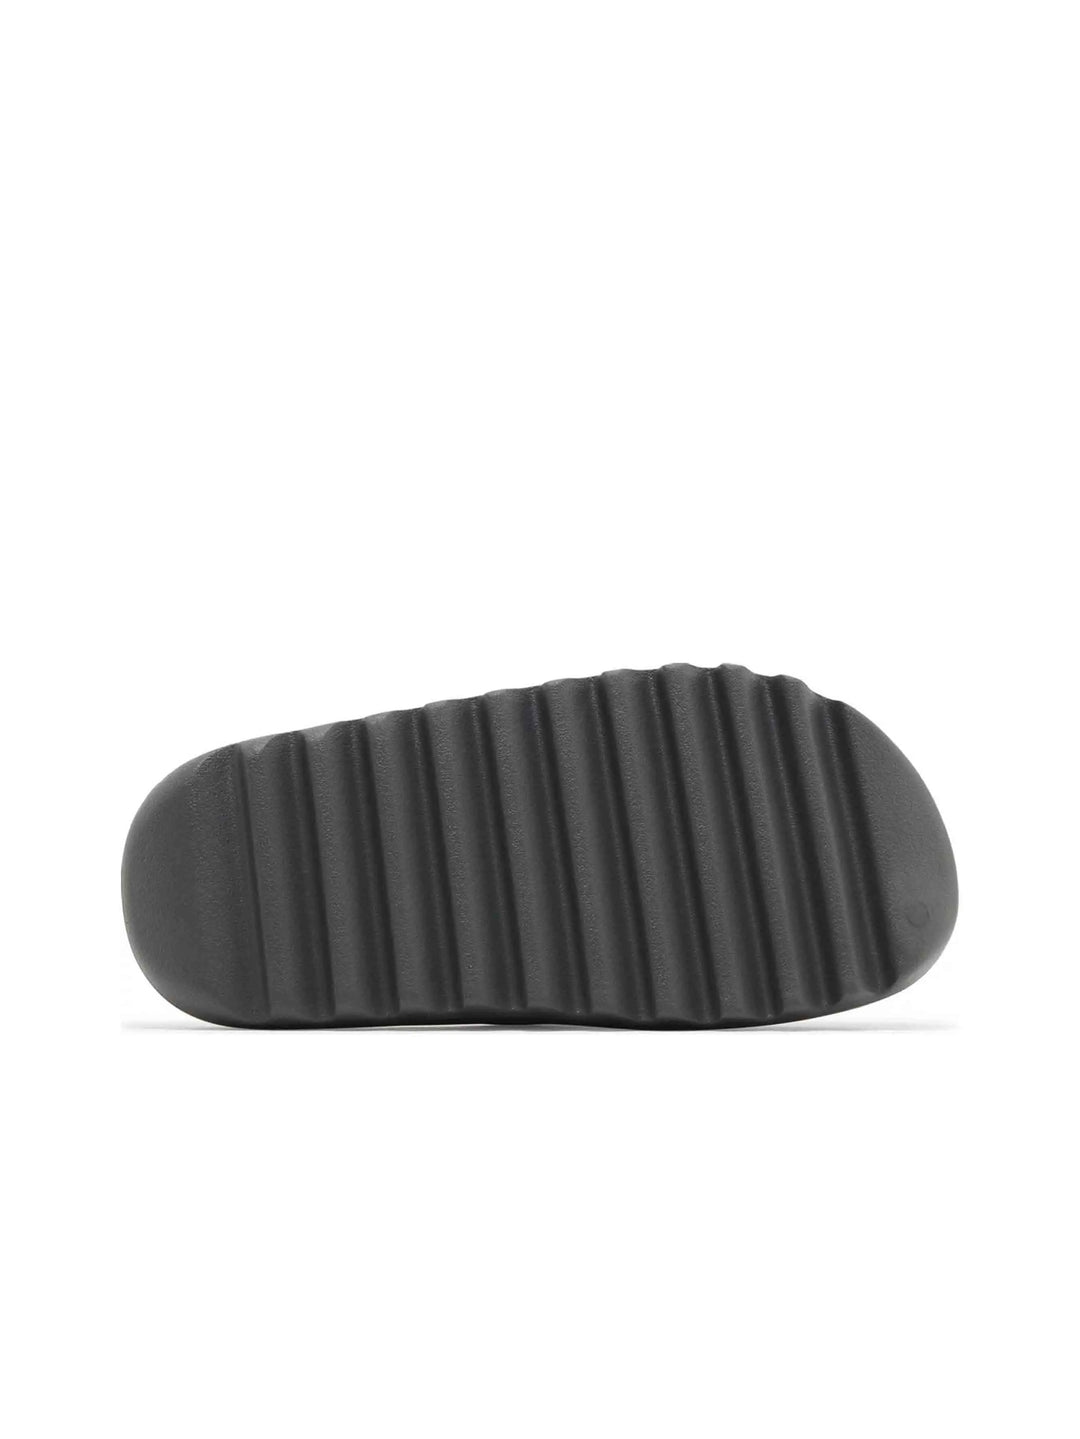 adidas Yeezy Slide Granite Prior